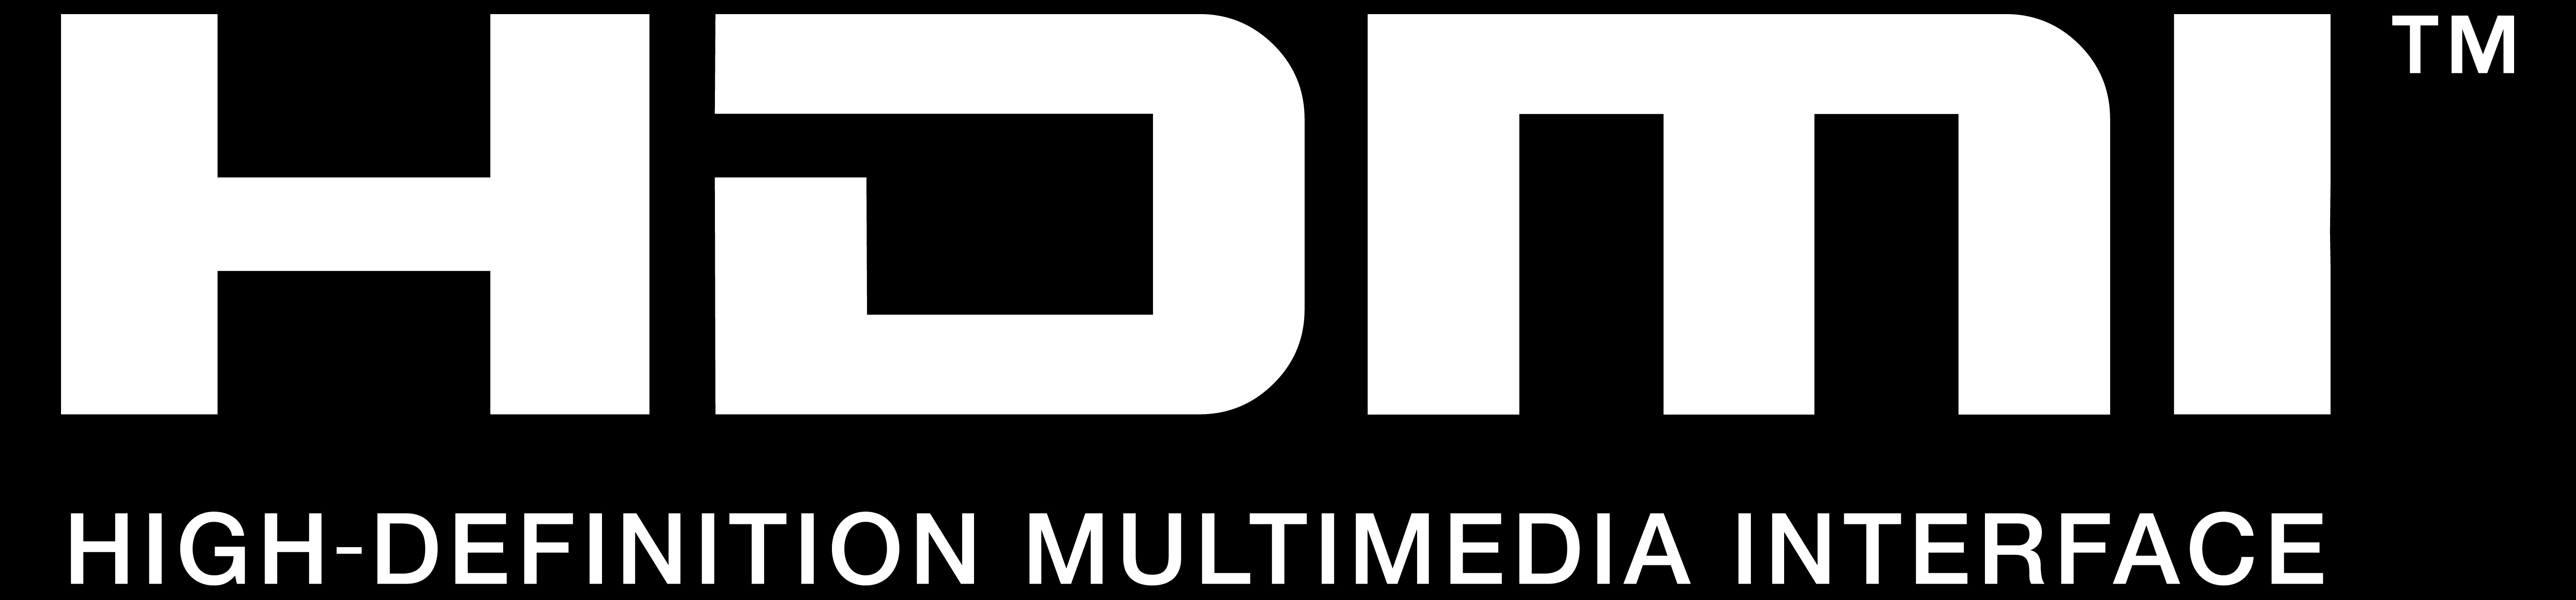 Image result for hdmi logo